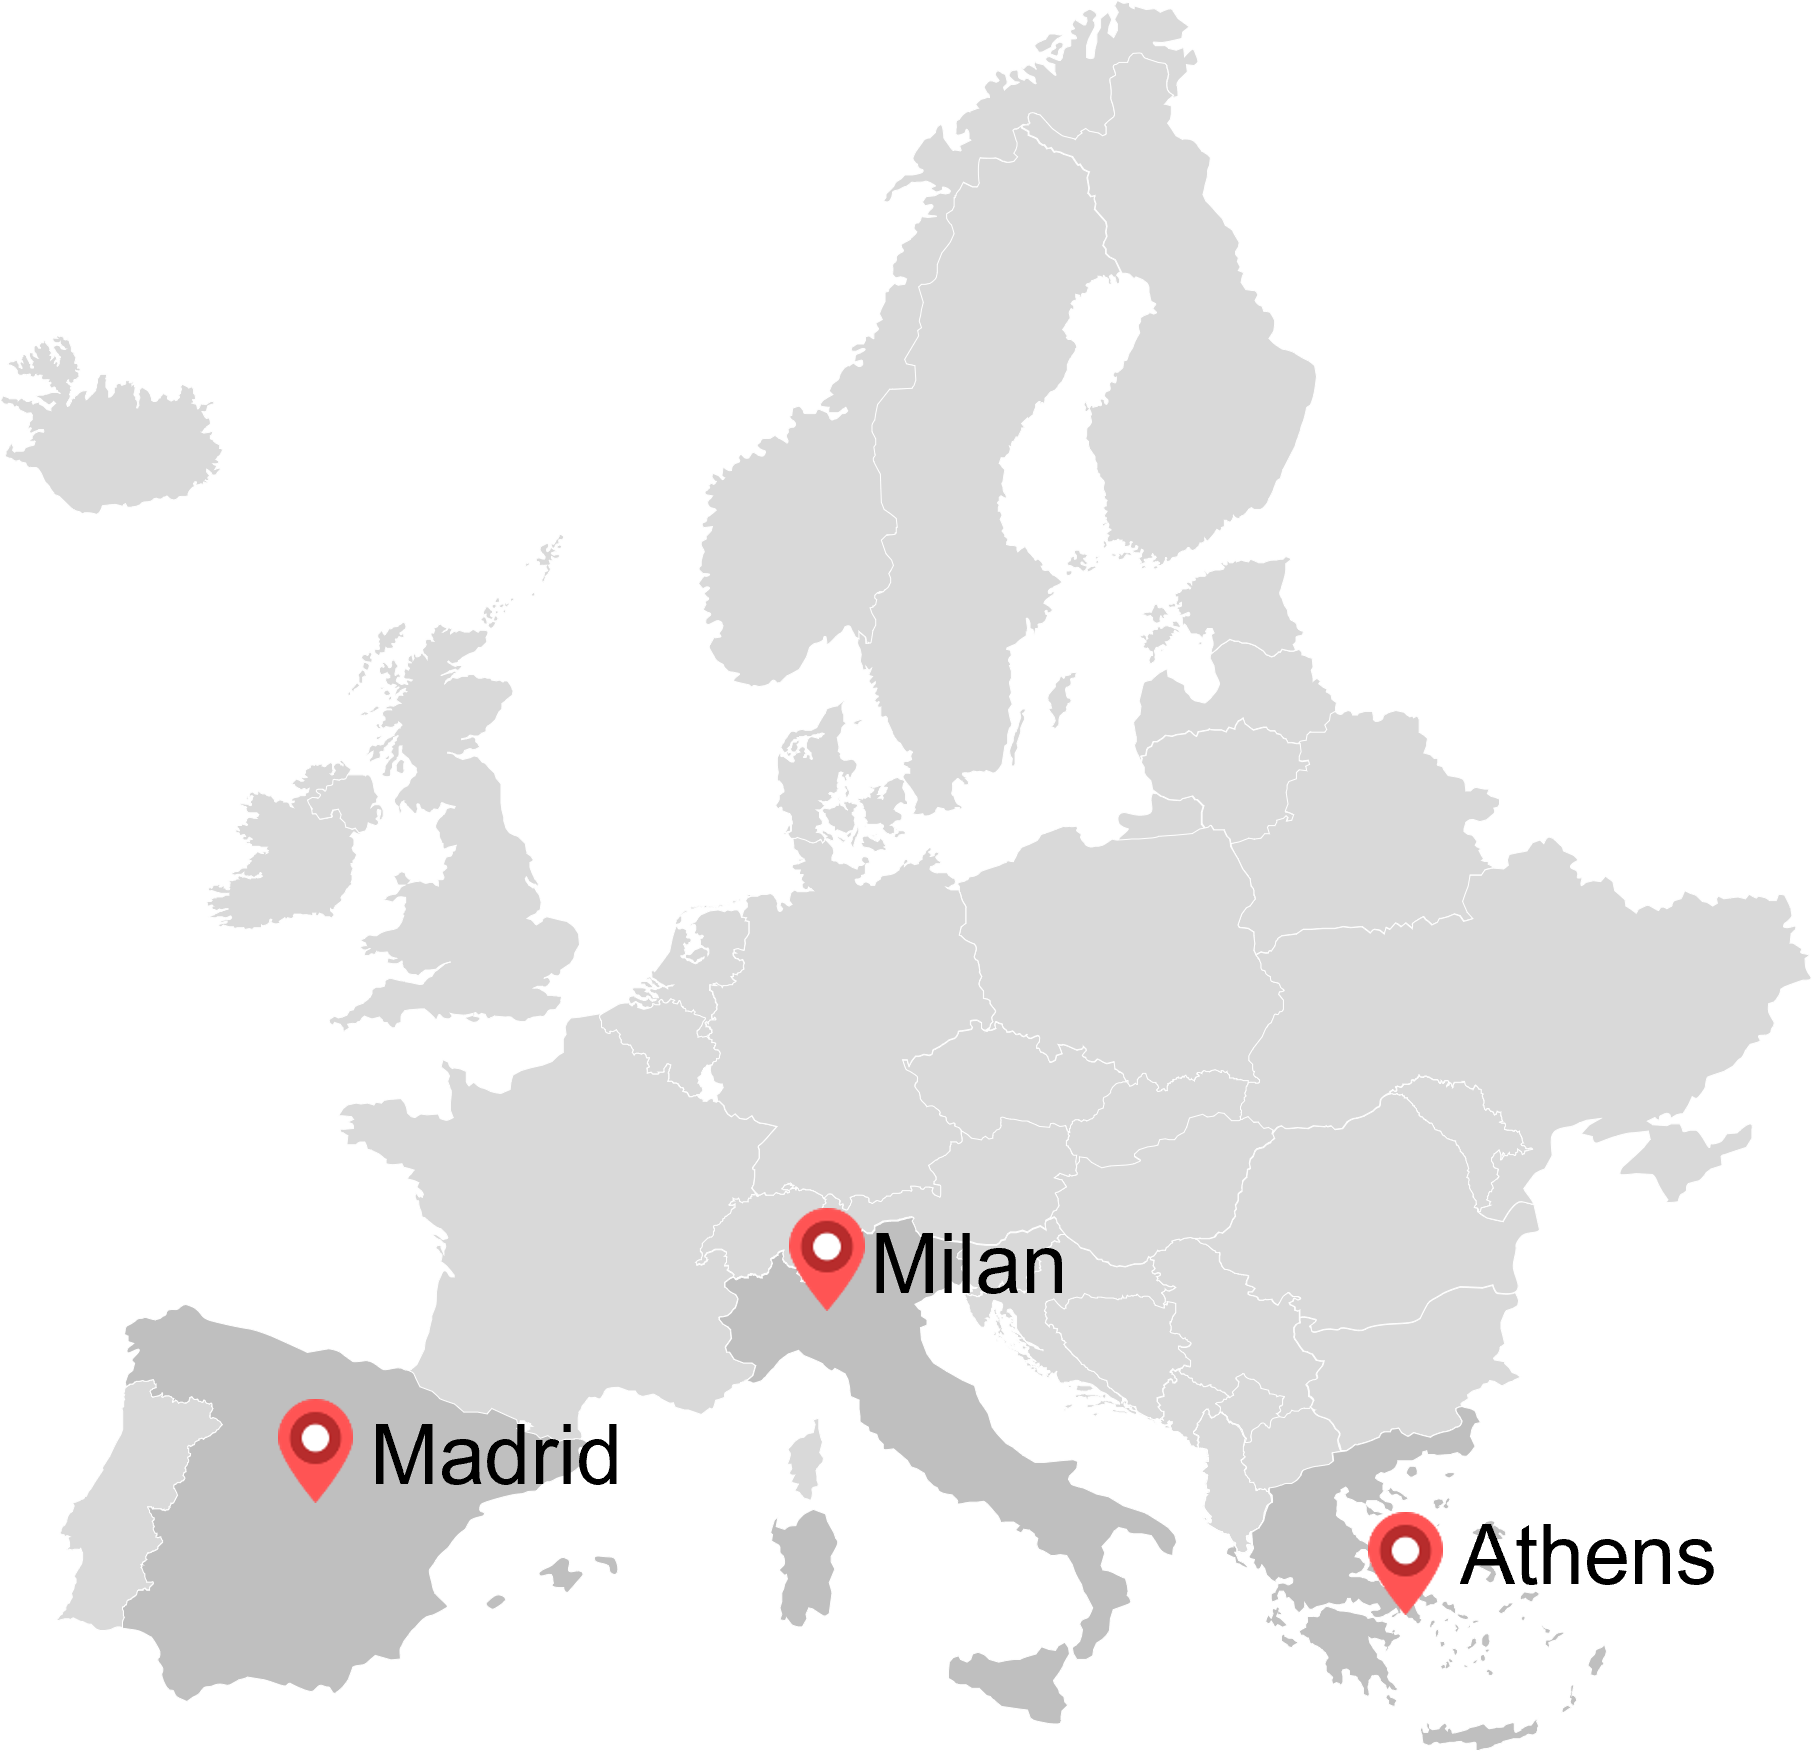 Map of Oliver Wyman locations